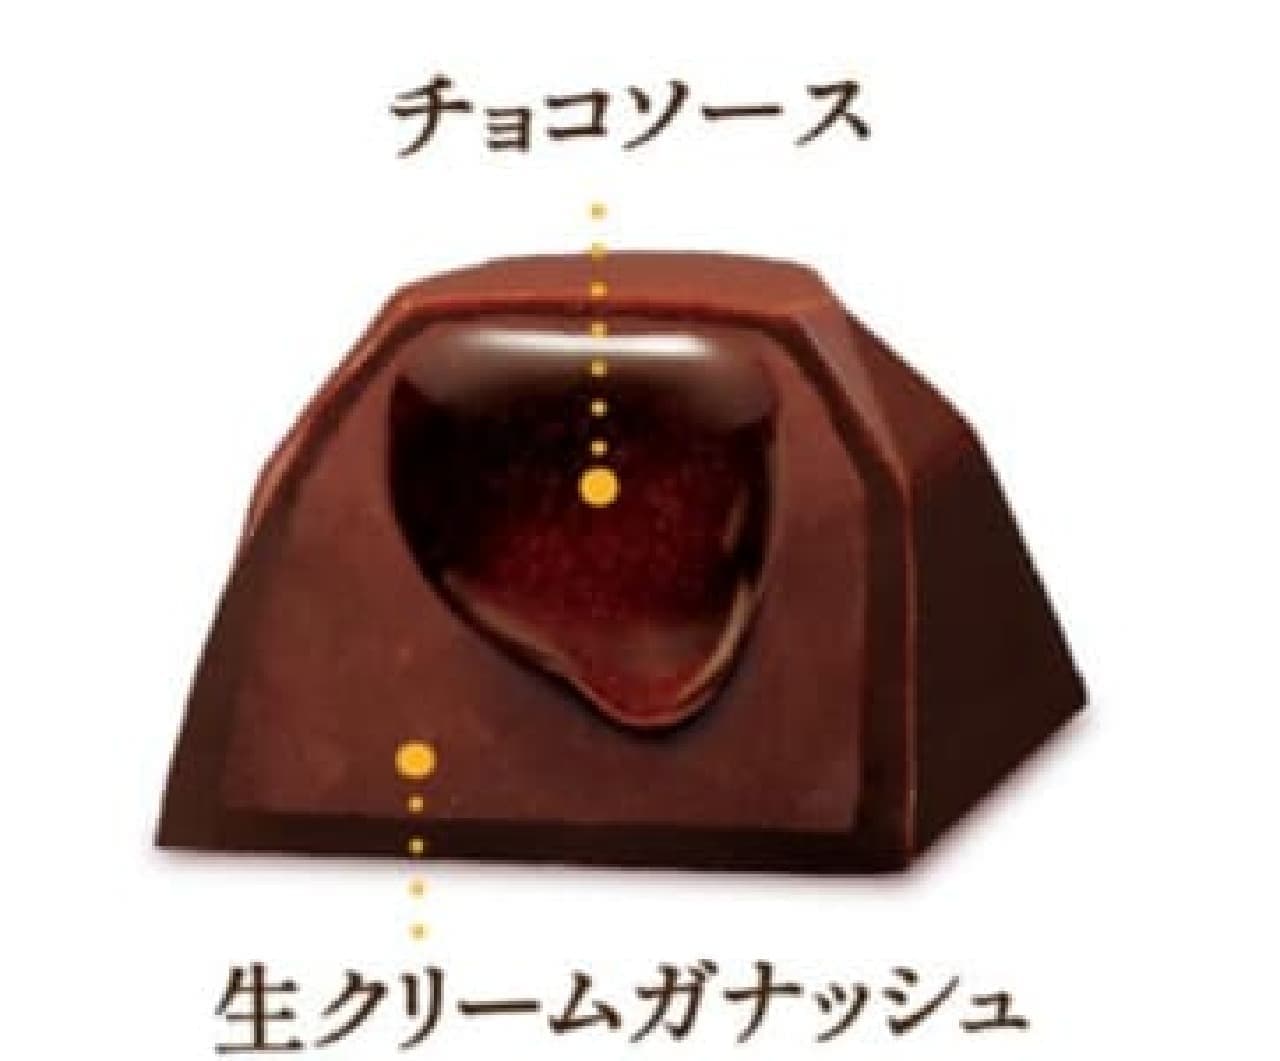 Look one grain of luxury (fondant chocolate)